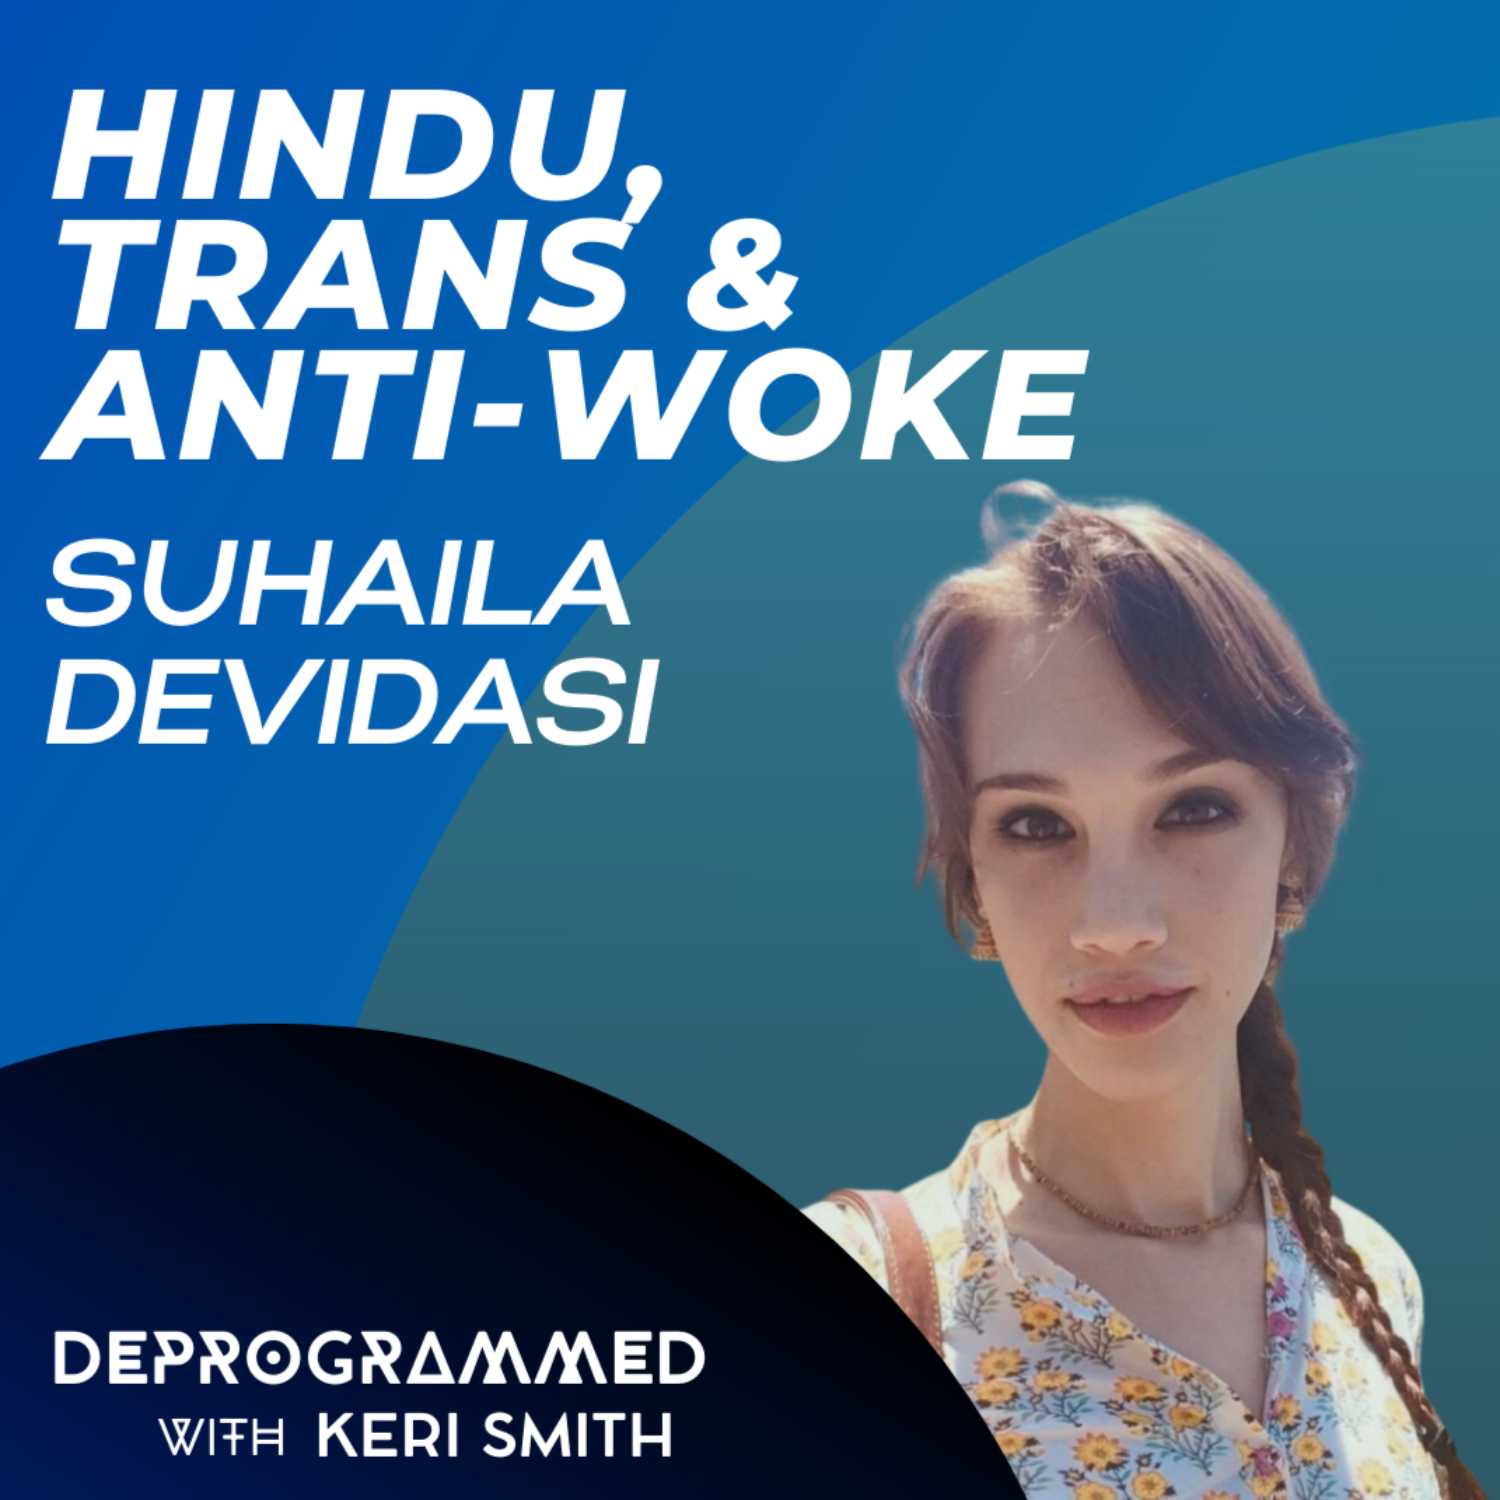 Deprogrammed - Hindu, Trans & Anti-Woke with Suhaila Devidasi